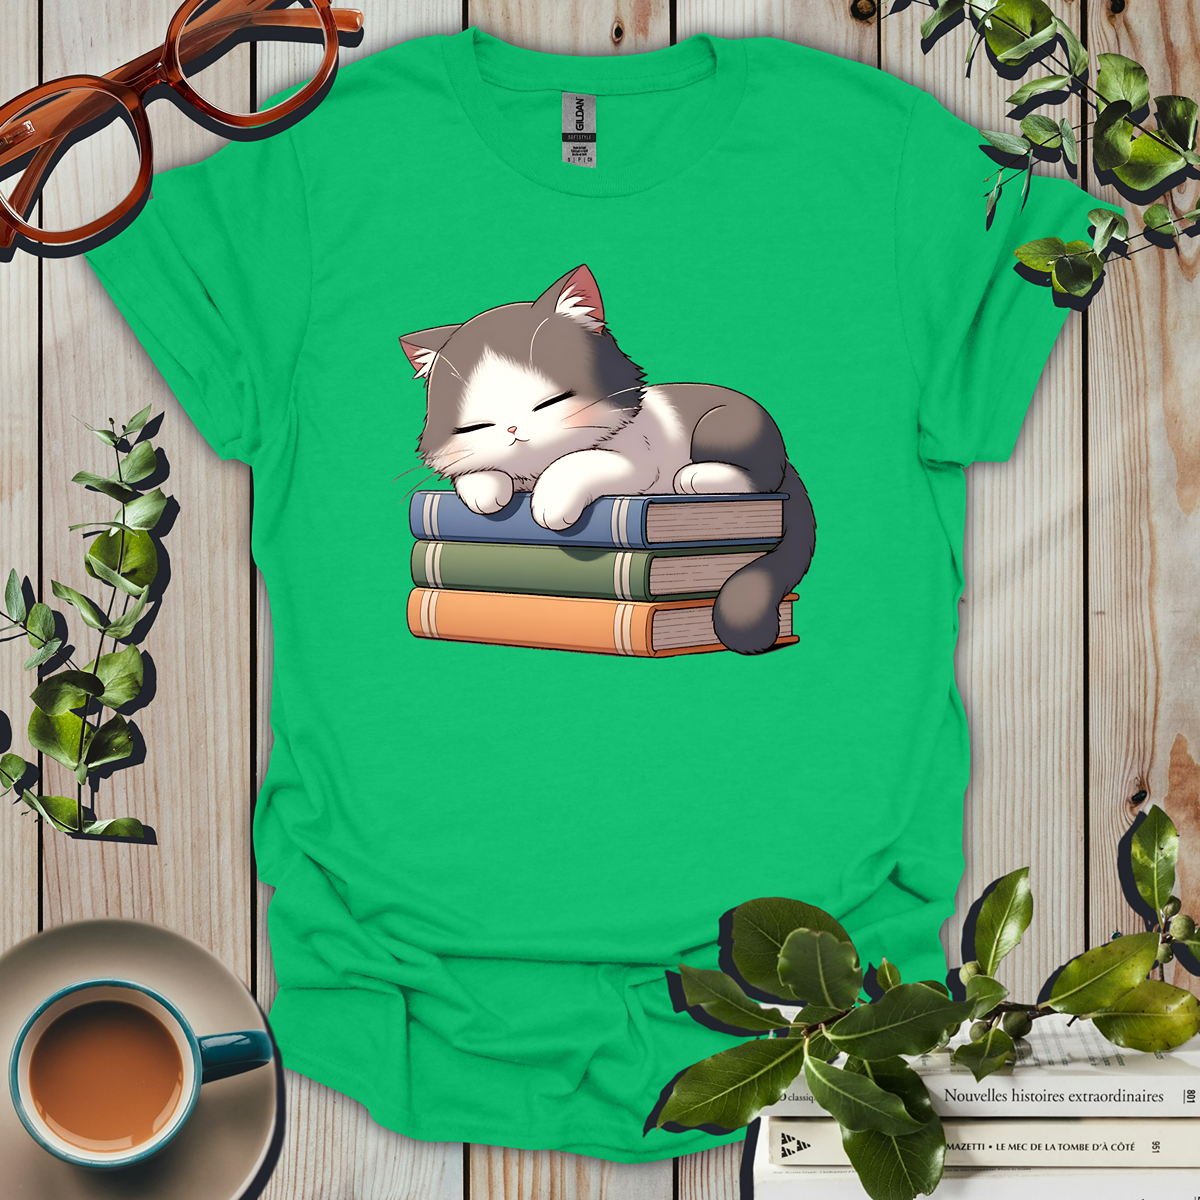 Book Lover Sleeping Kitty T-Shirt